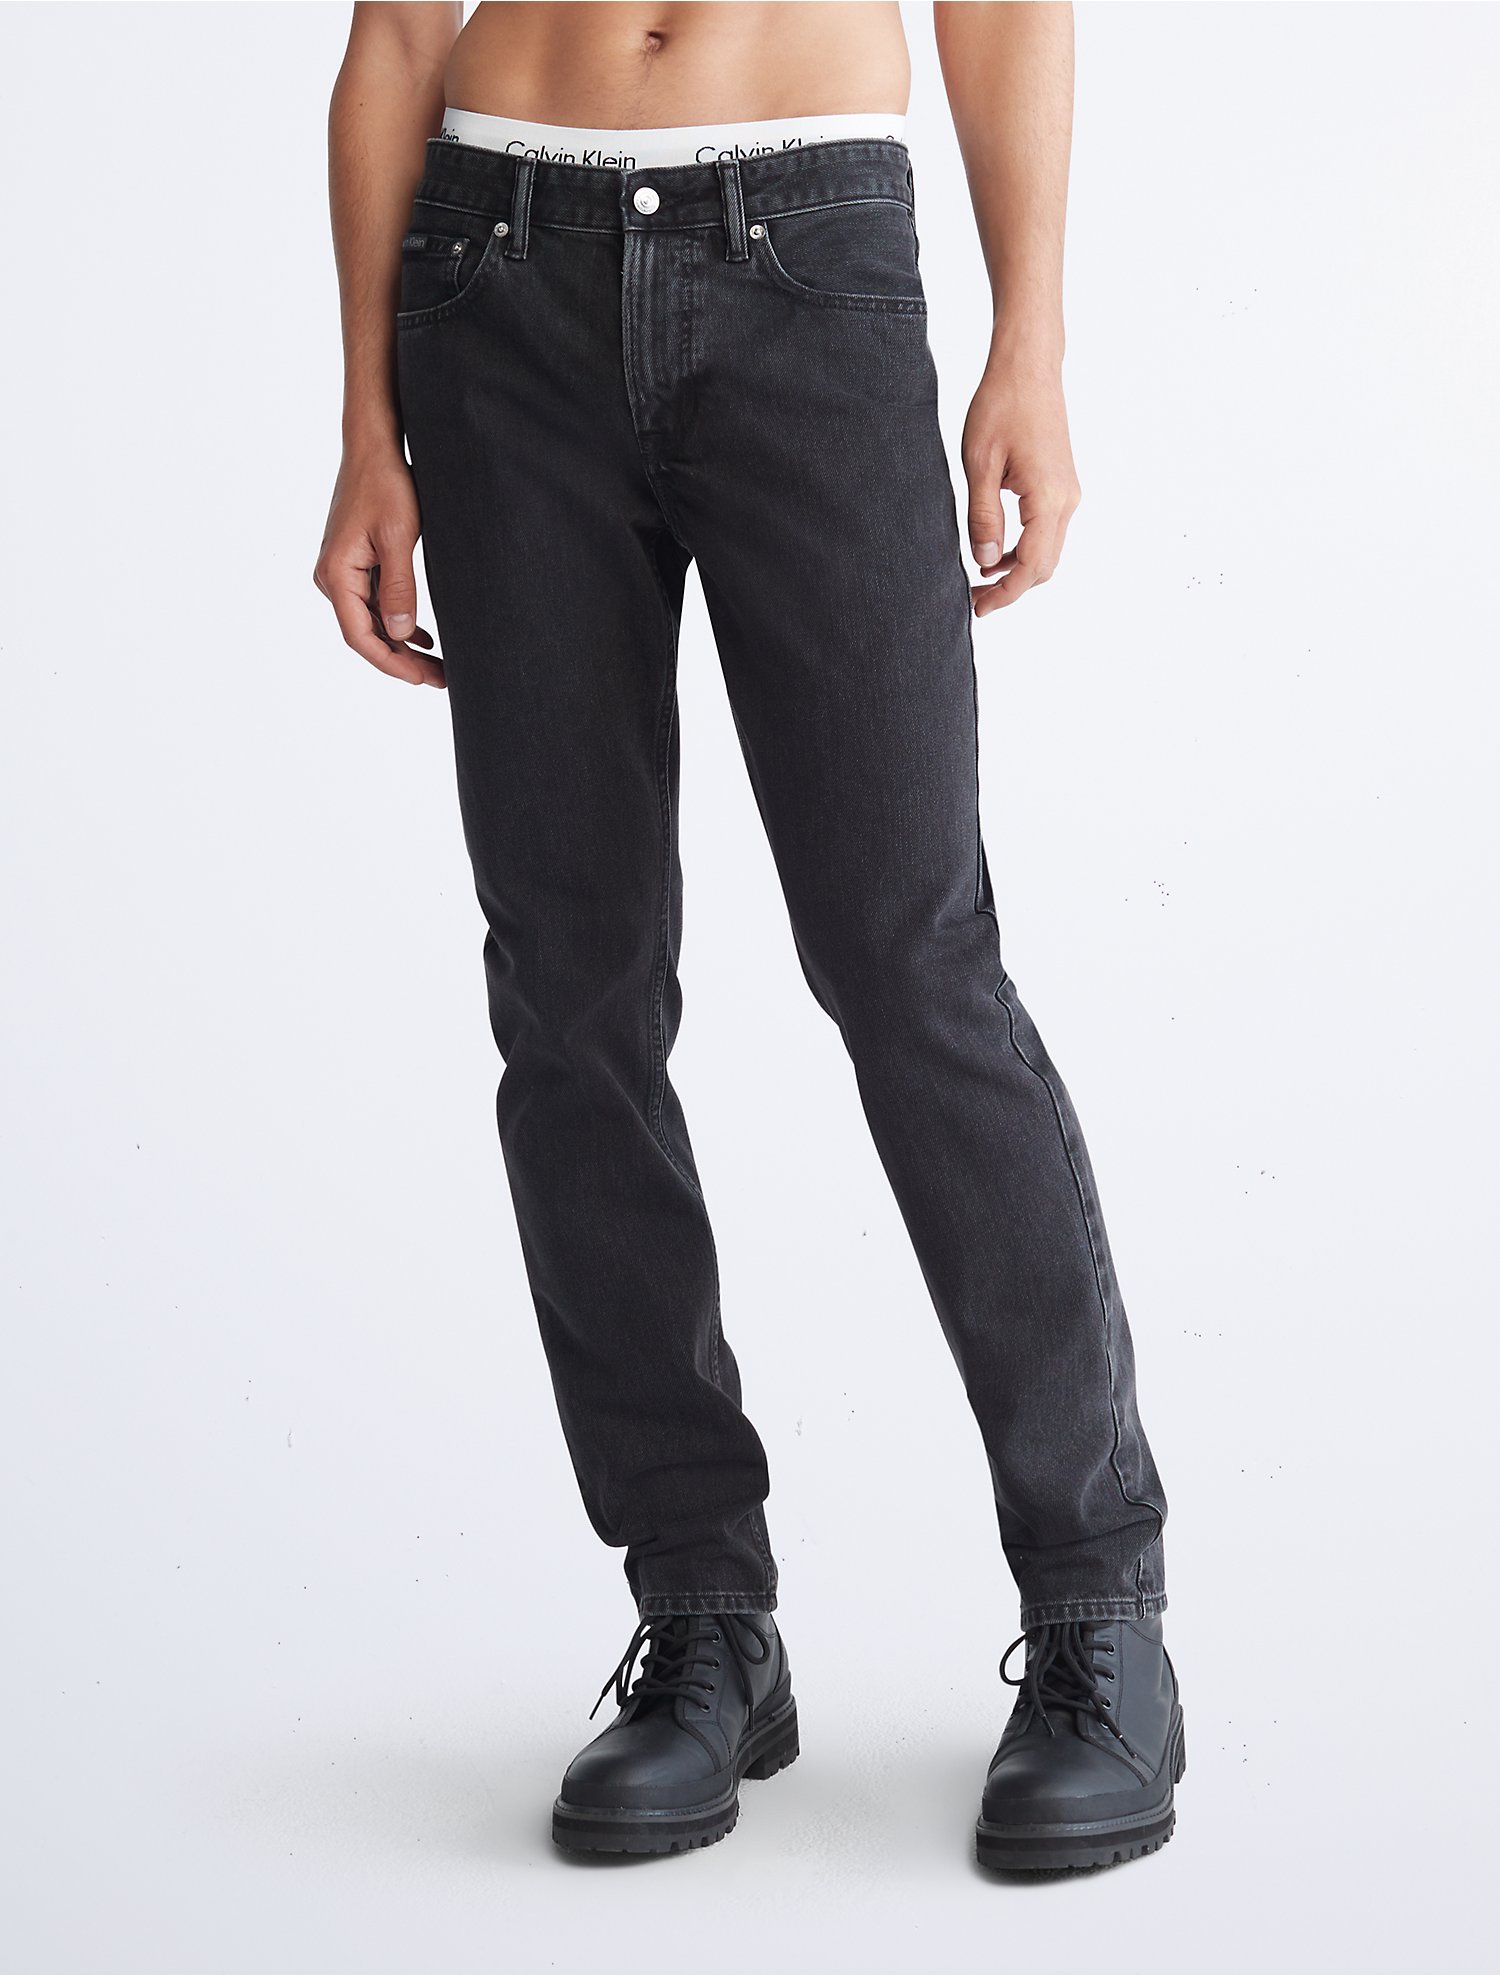 Samuel verklaren verkeer Slim Fit Black Jeans | Calvin Klein